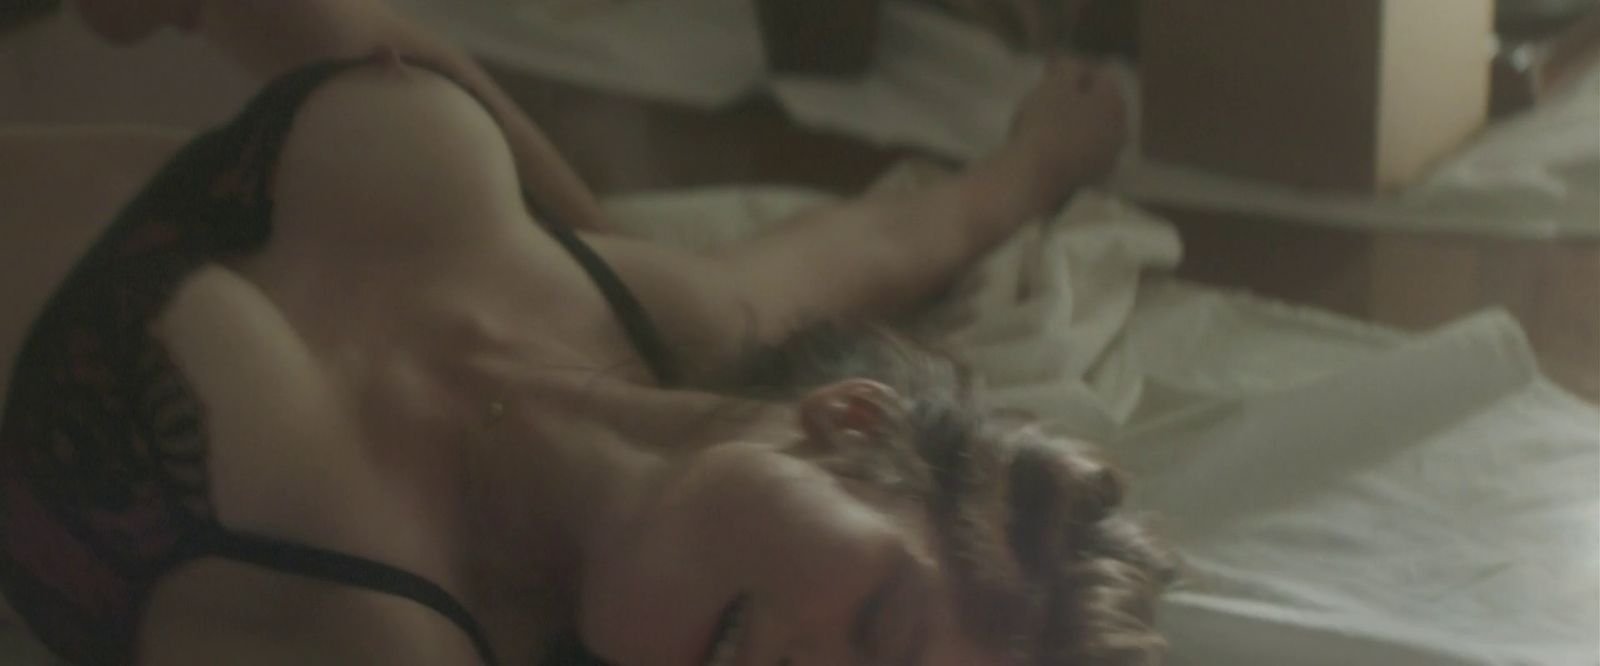 These Gemma Arterton Nudes Are Just Delicious 57 Pics